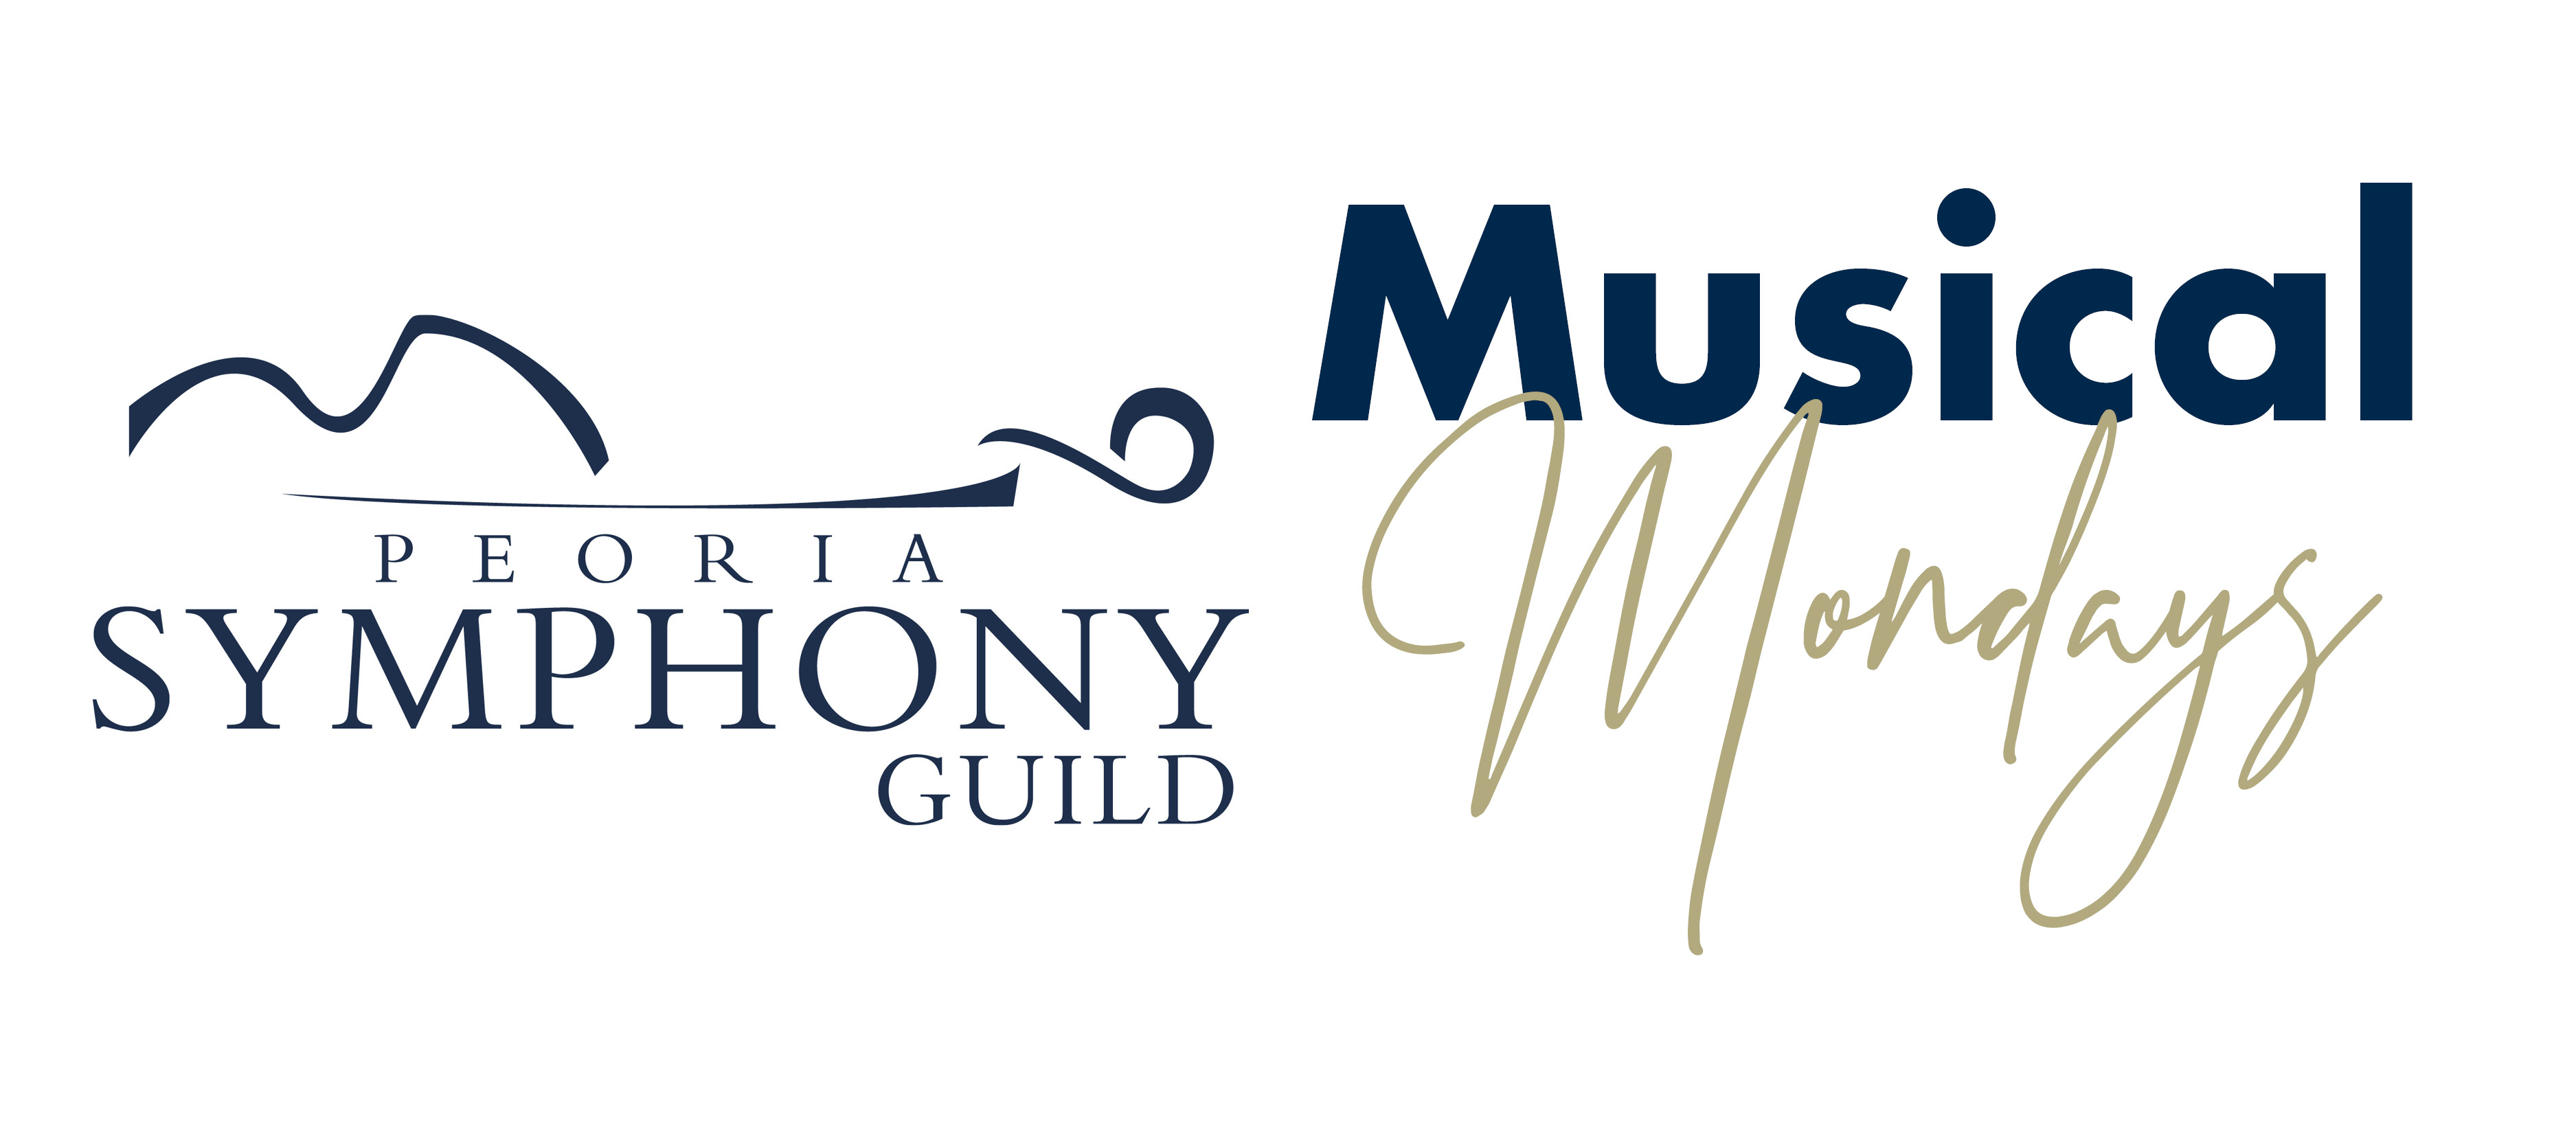 Symphony Guild Musical Monday: An Evening of Jazz